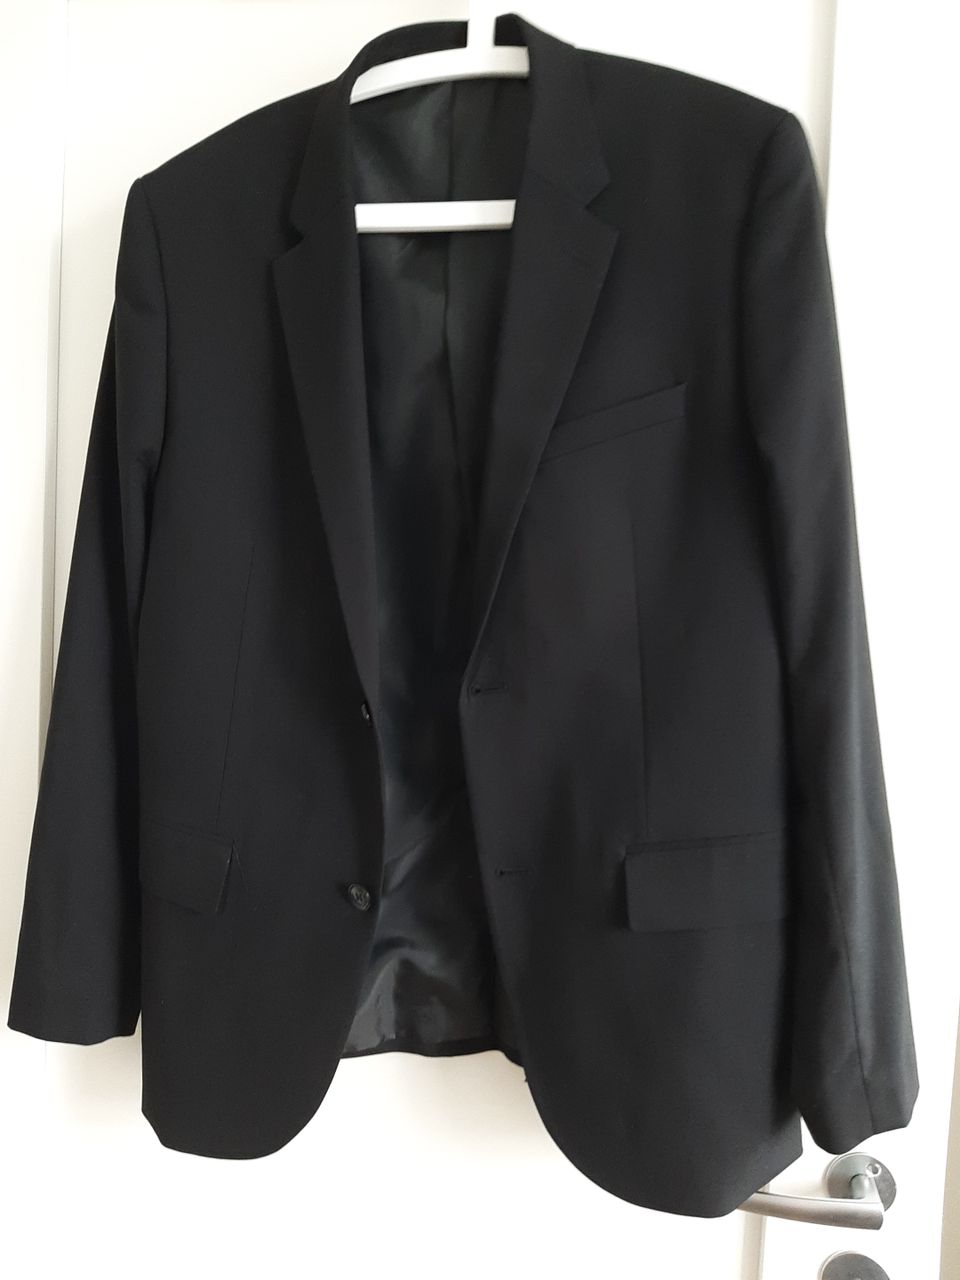 H&M:n musta puvun takki.